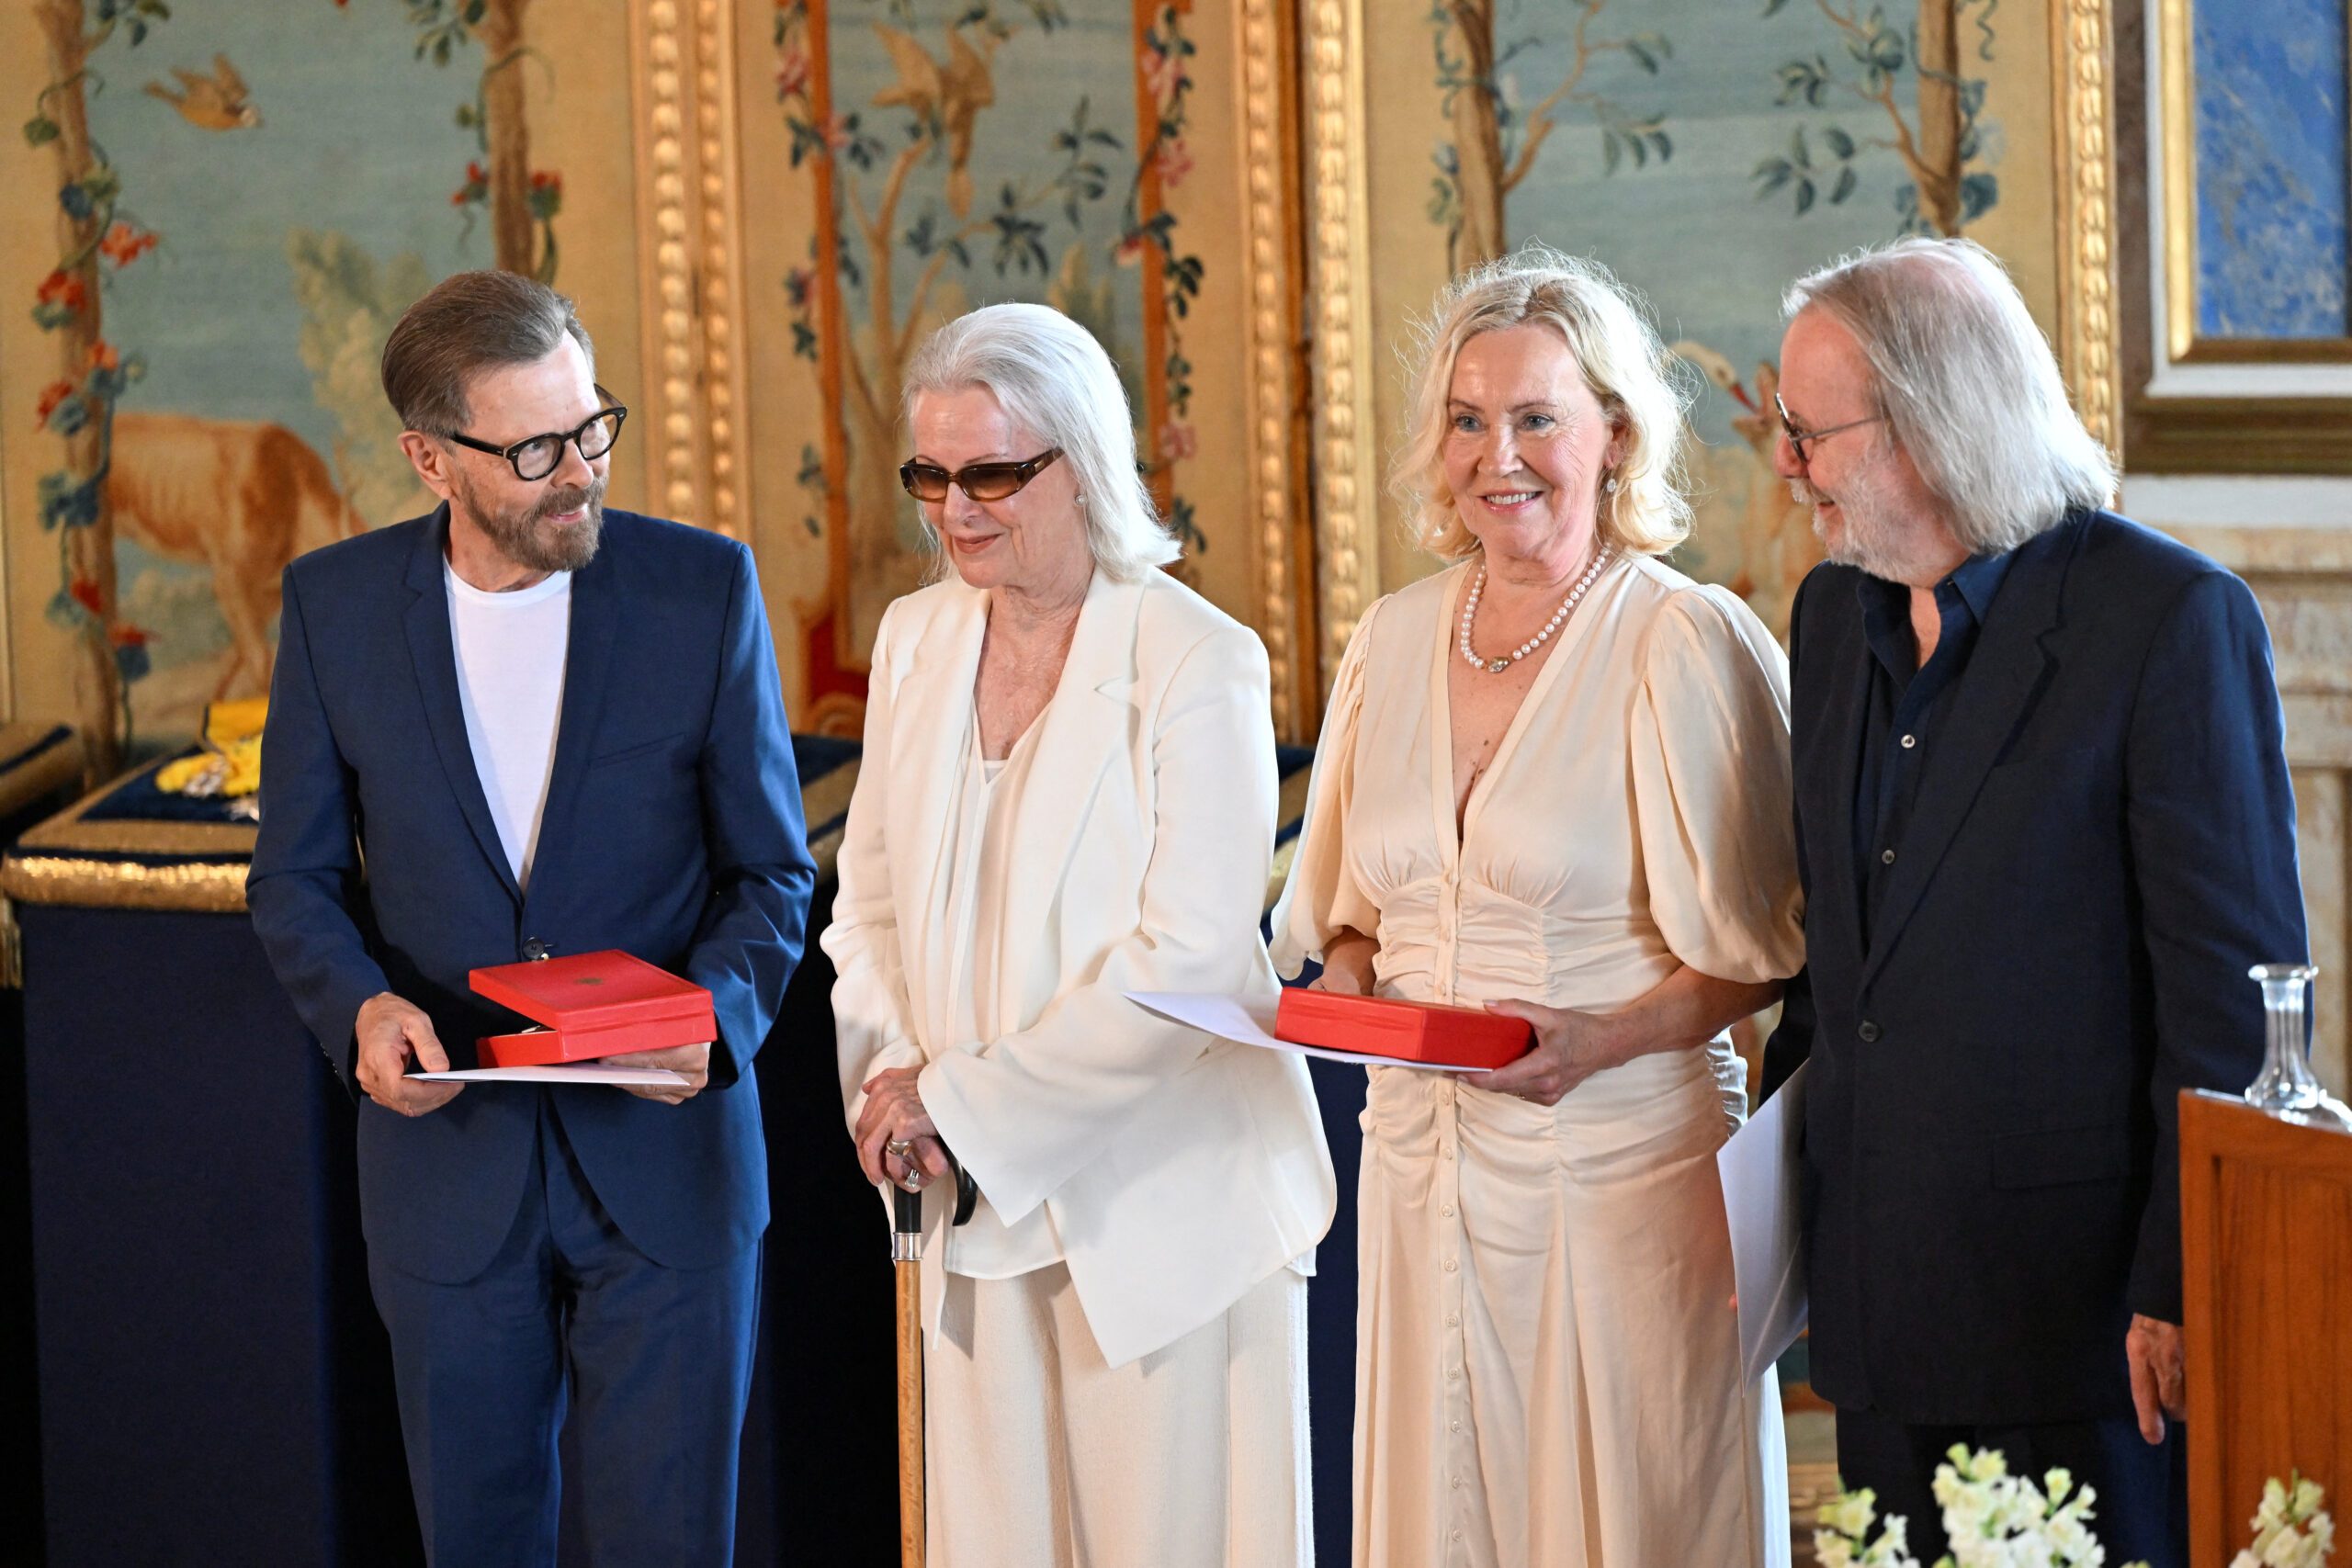 ABBA members reunite to receive top Swedish honor